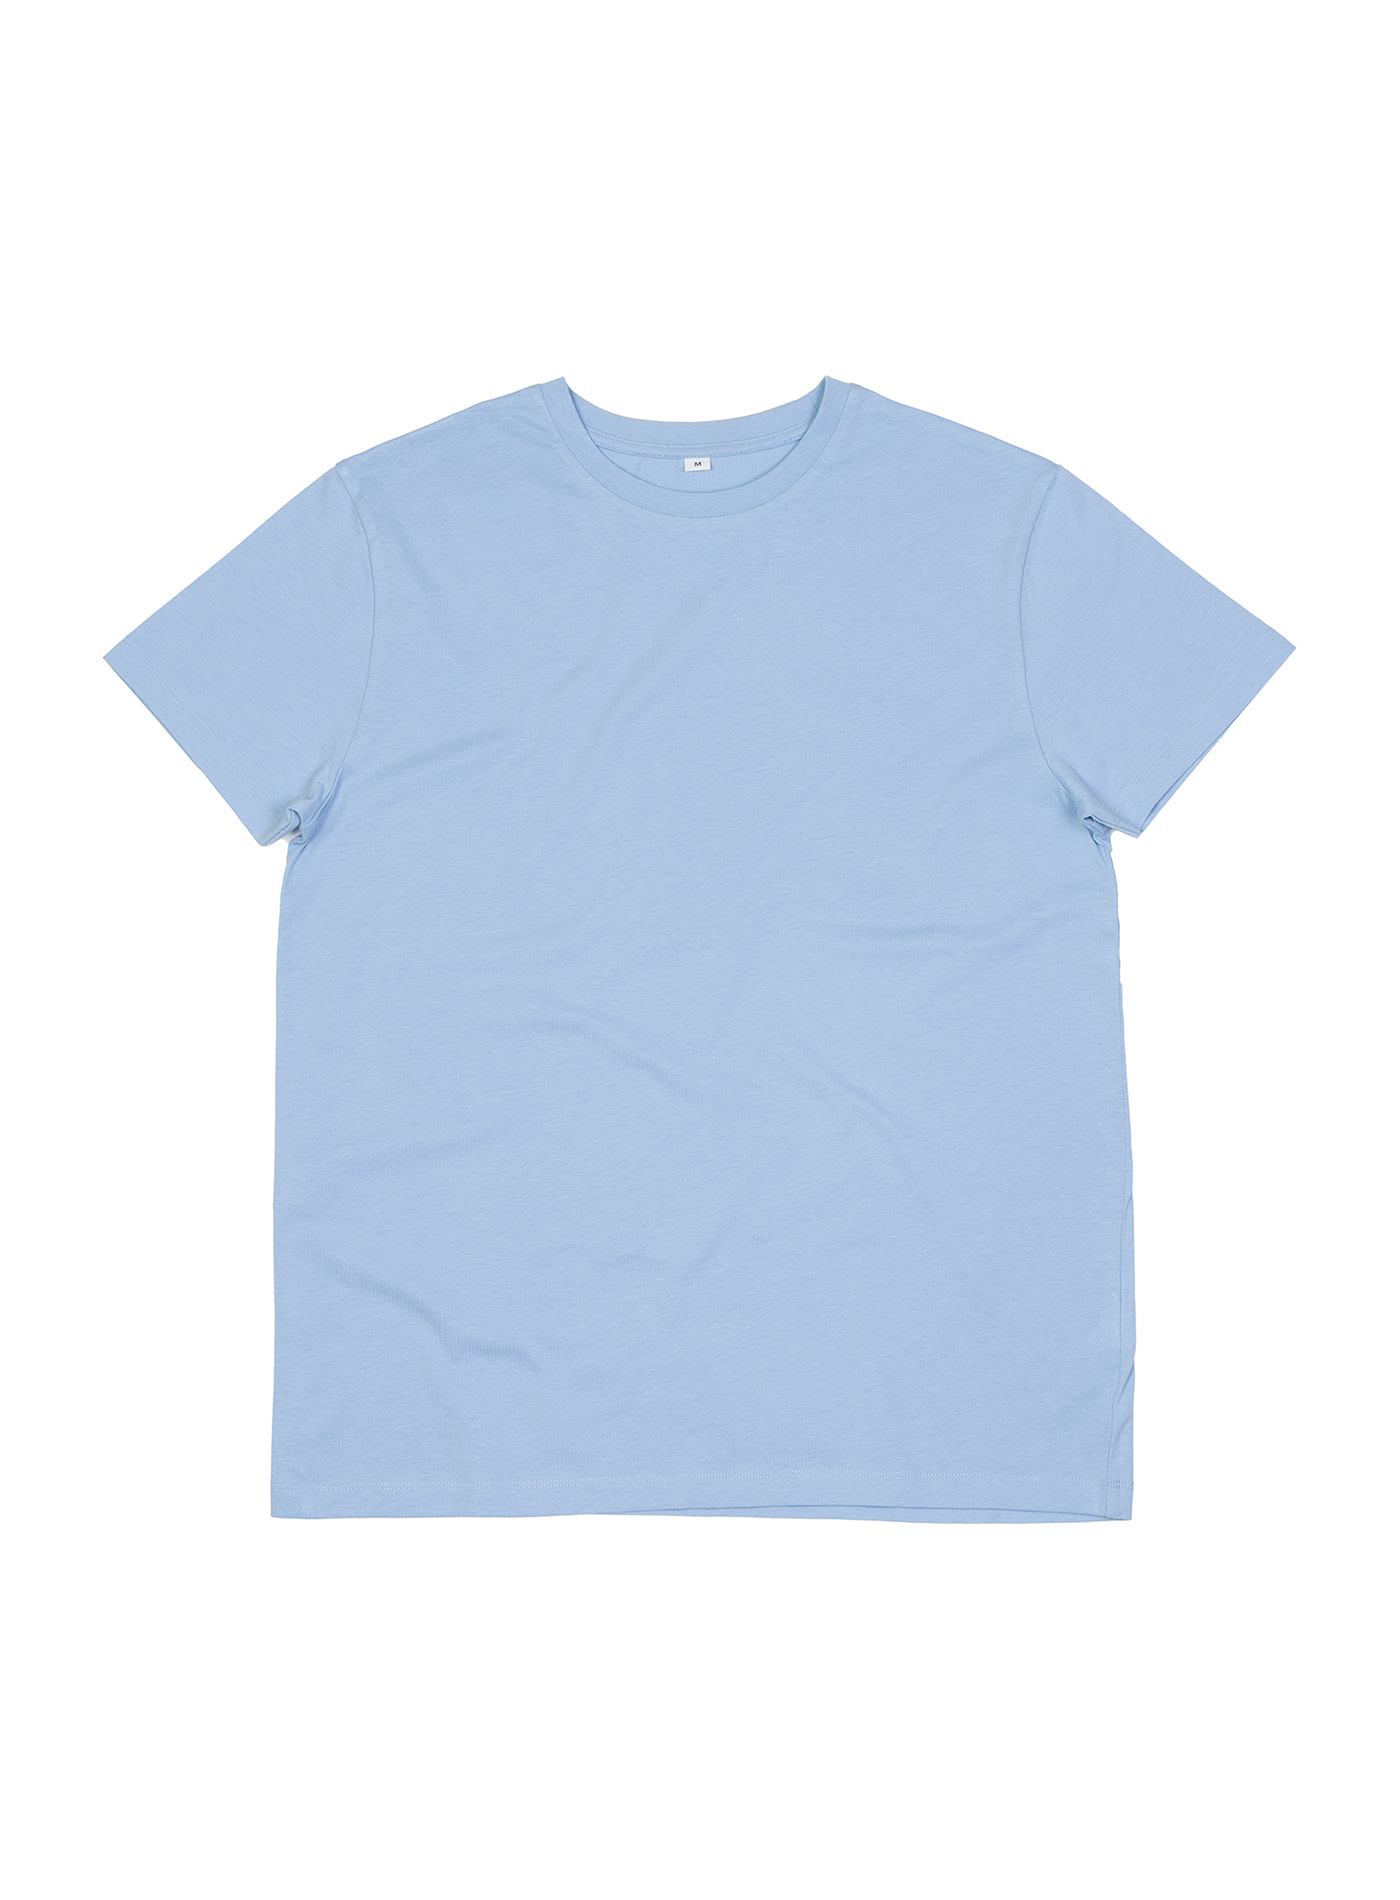 Pánské tričko Mantis Essential Organic - Blankytně modrá XS